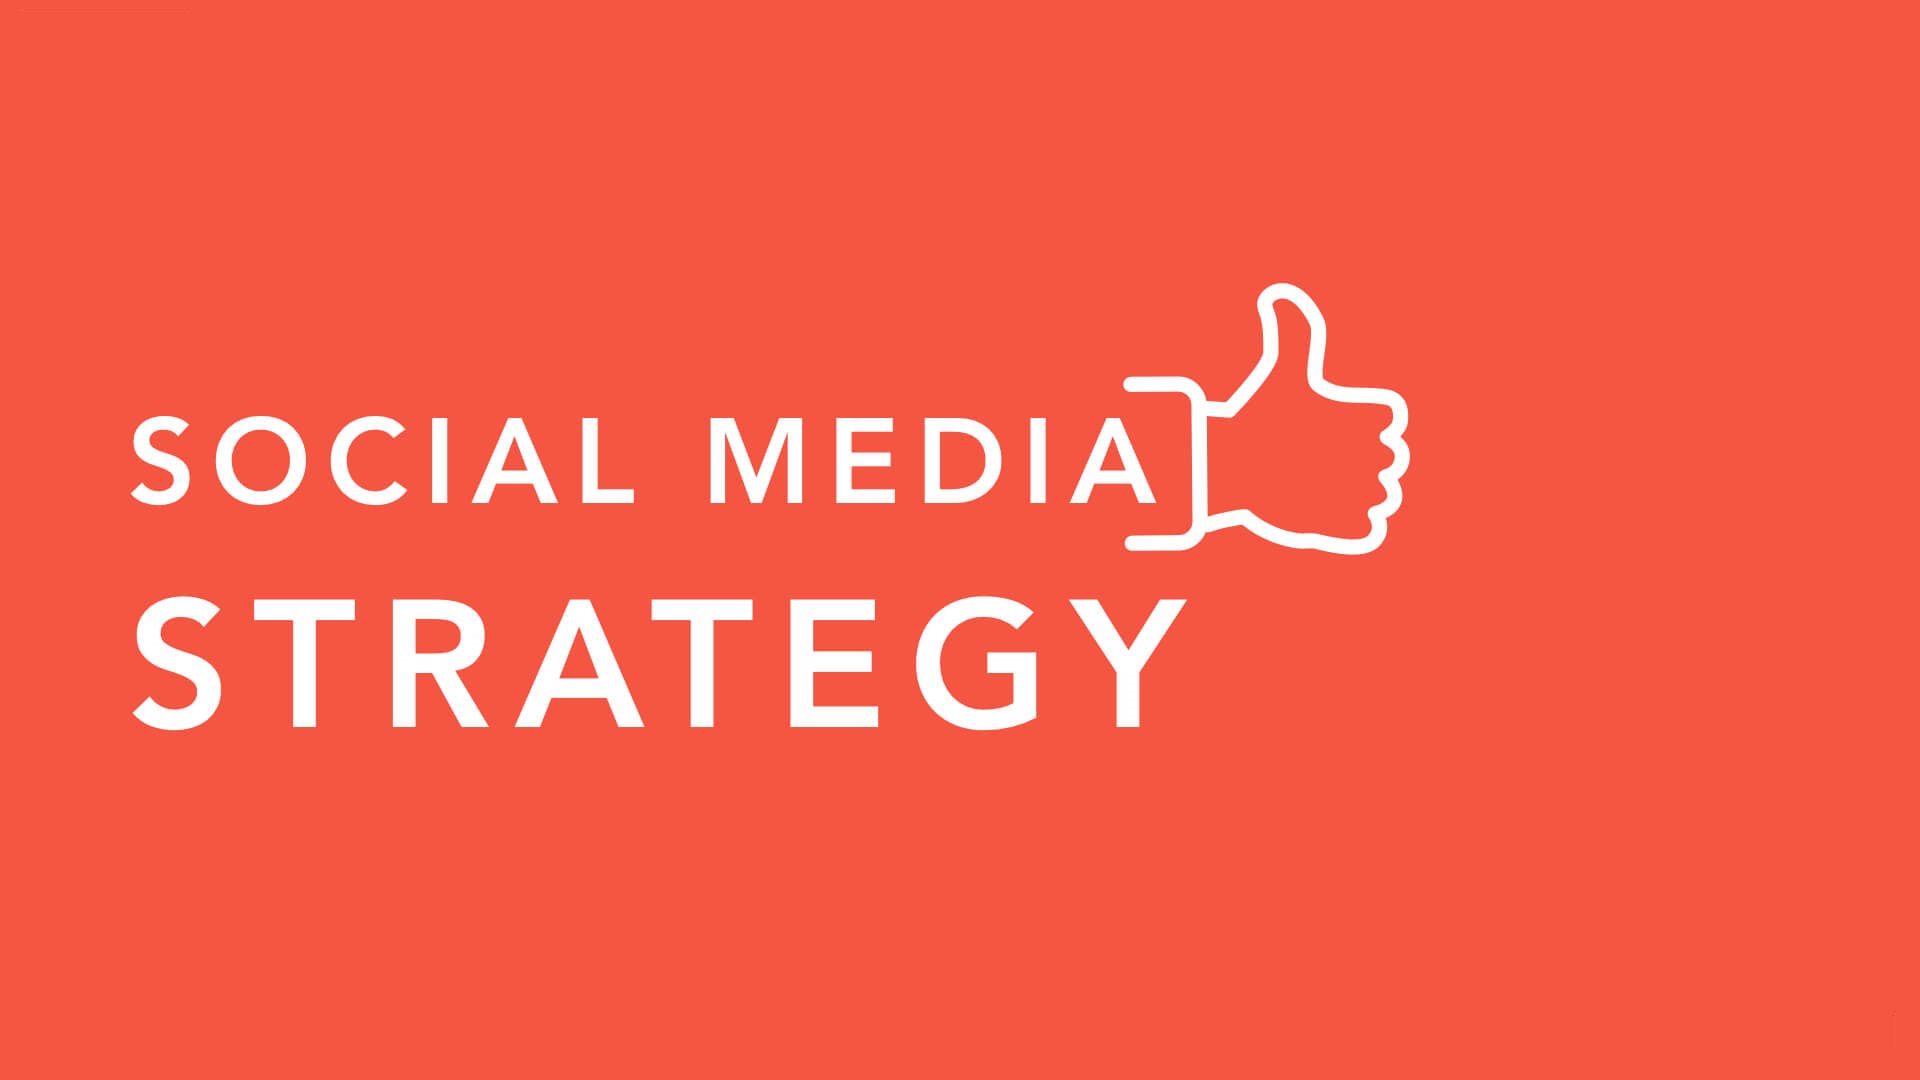 PR Agencies And Social Media: Tips To Power Social Brand Building